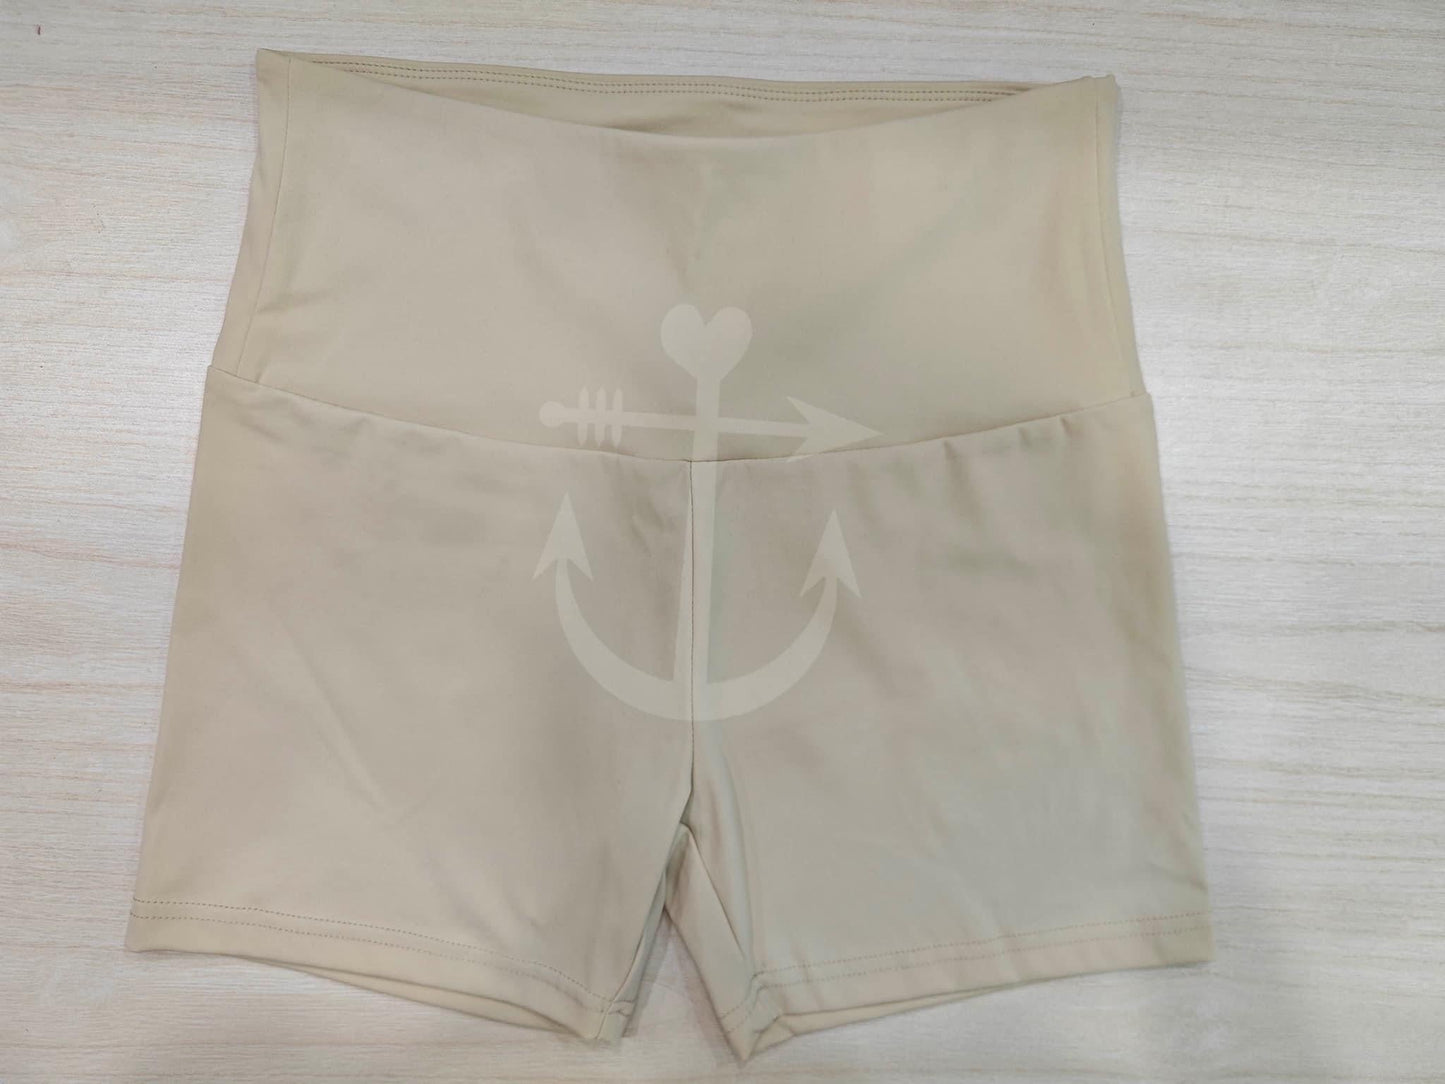 Anchored Arrows Nude Shapewear Shorts